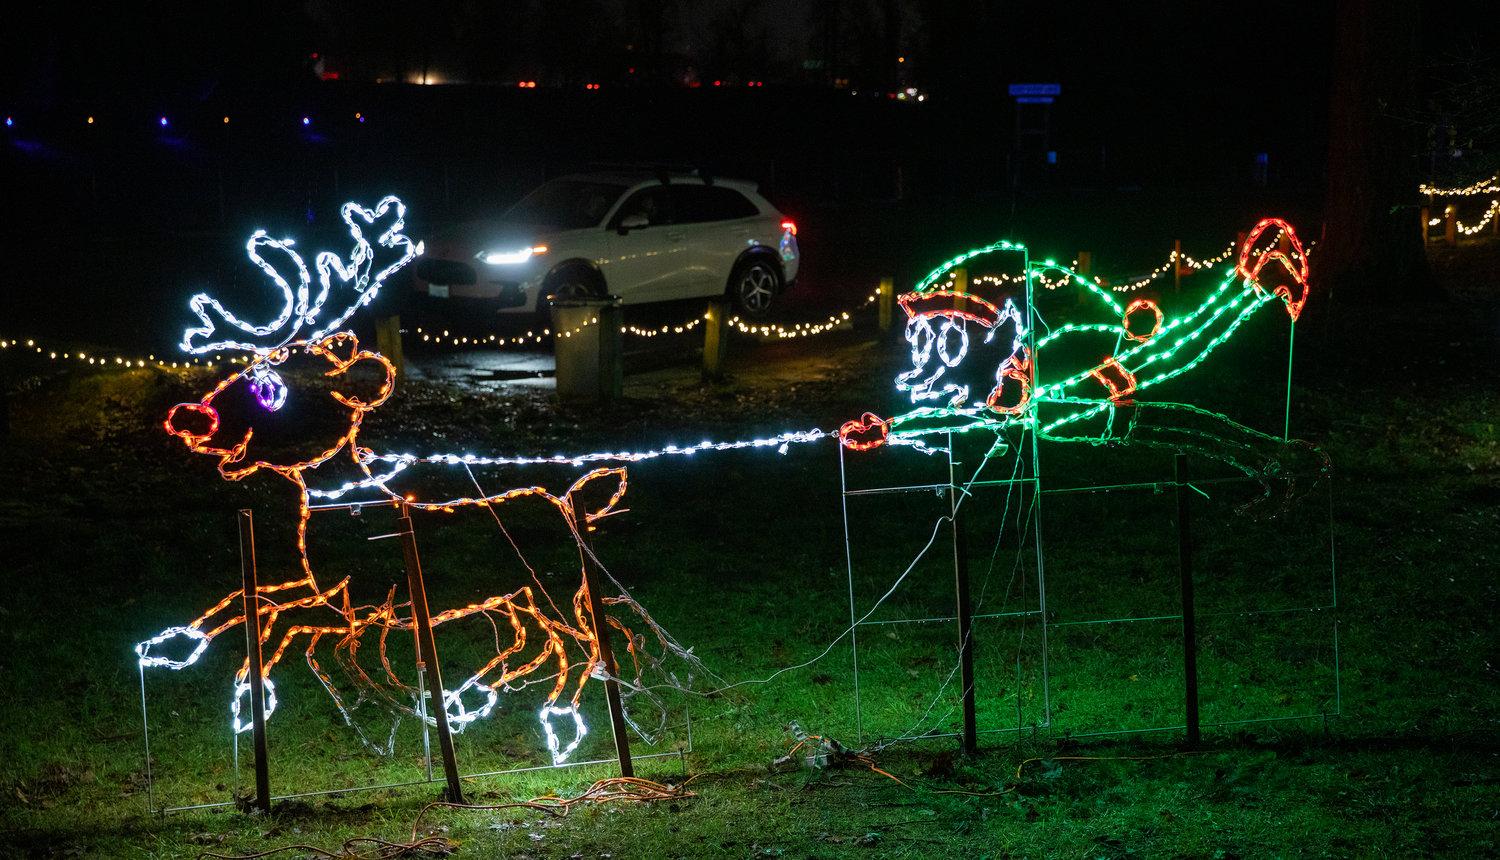 Christmas lights illuminate Borst Park Thursday night as cars drive through to view the display.